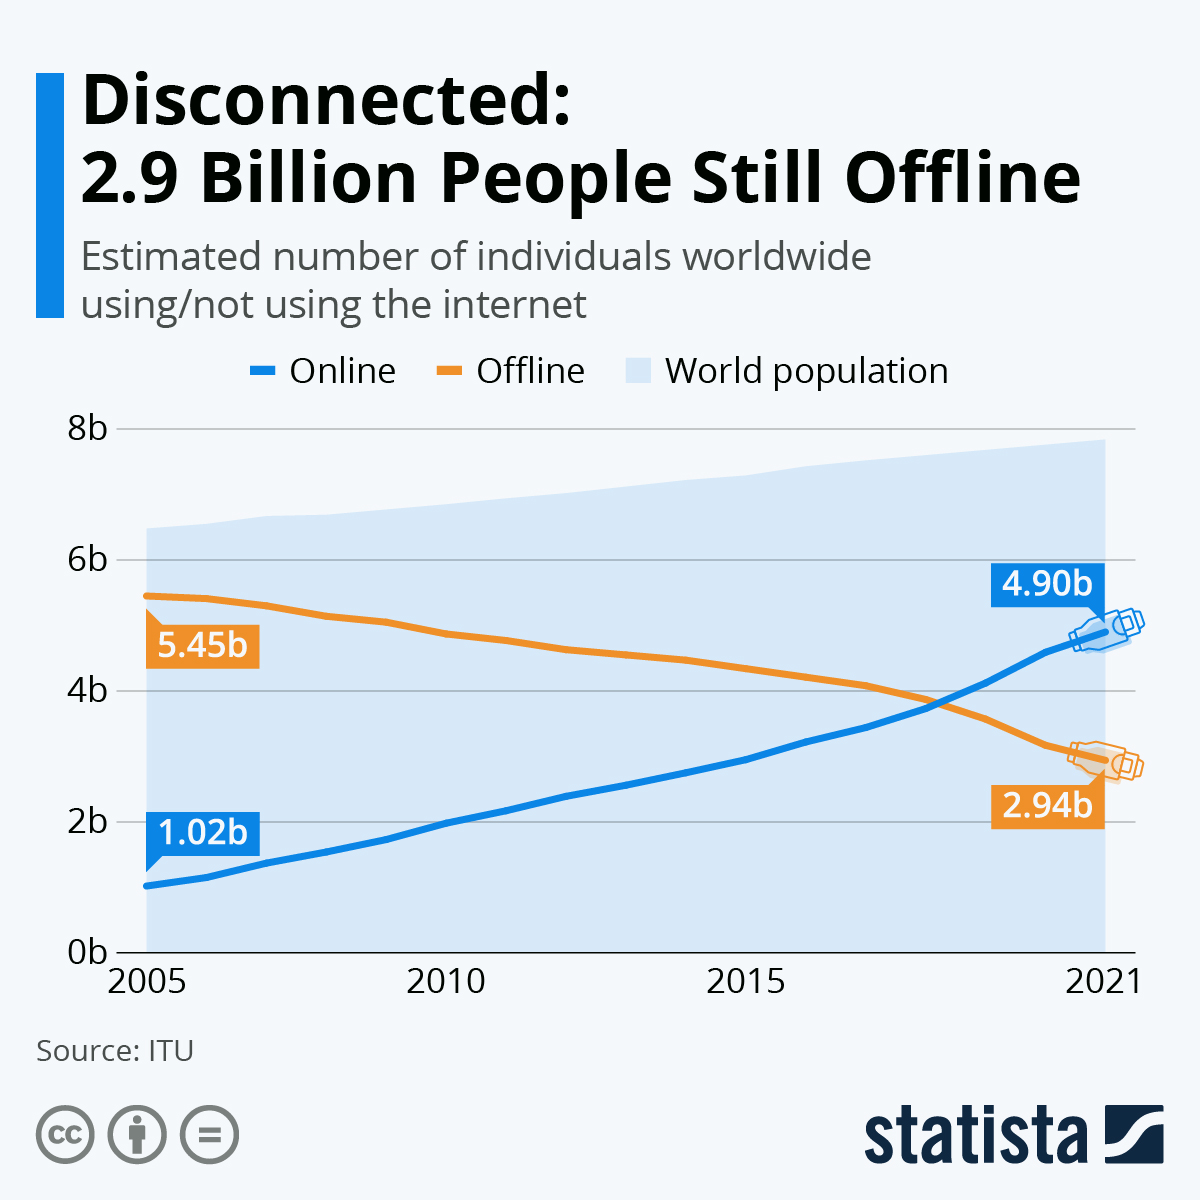 Disconnected: 2.9 Billion People Still Offline
